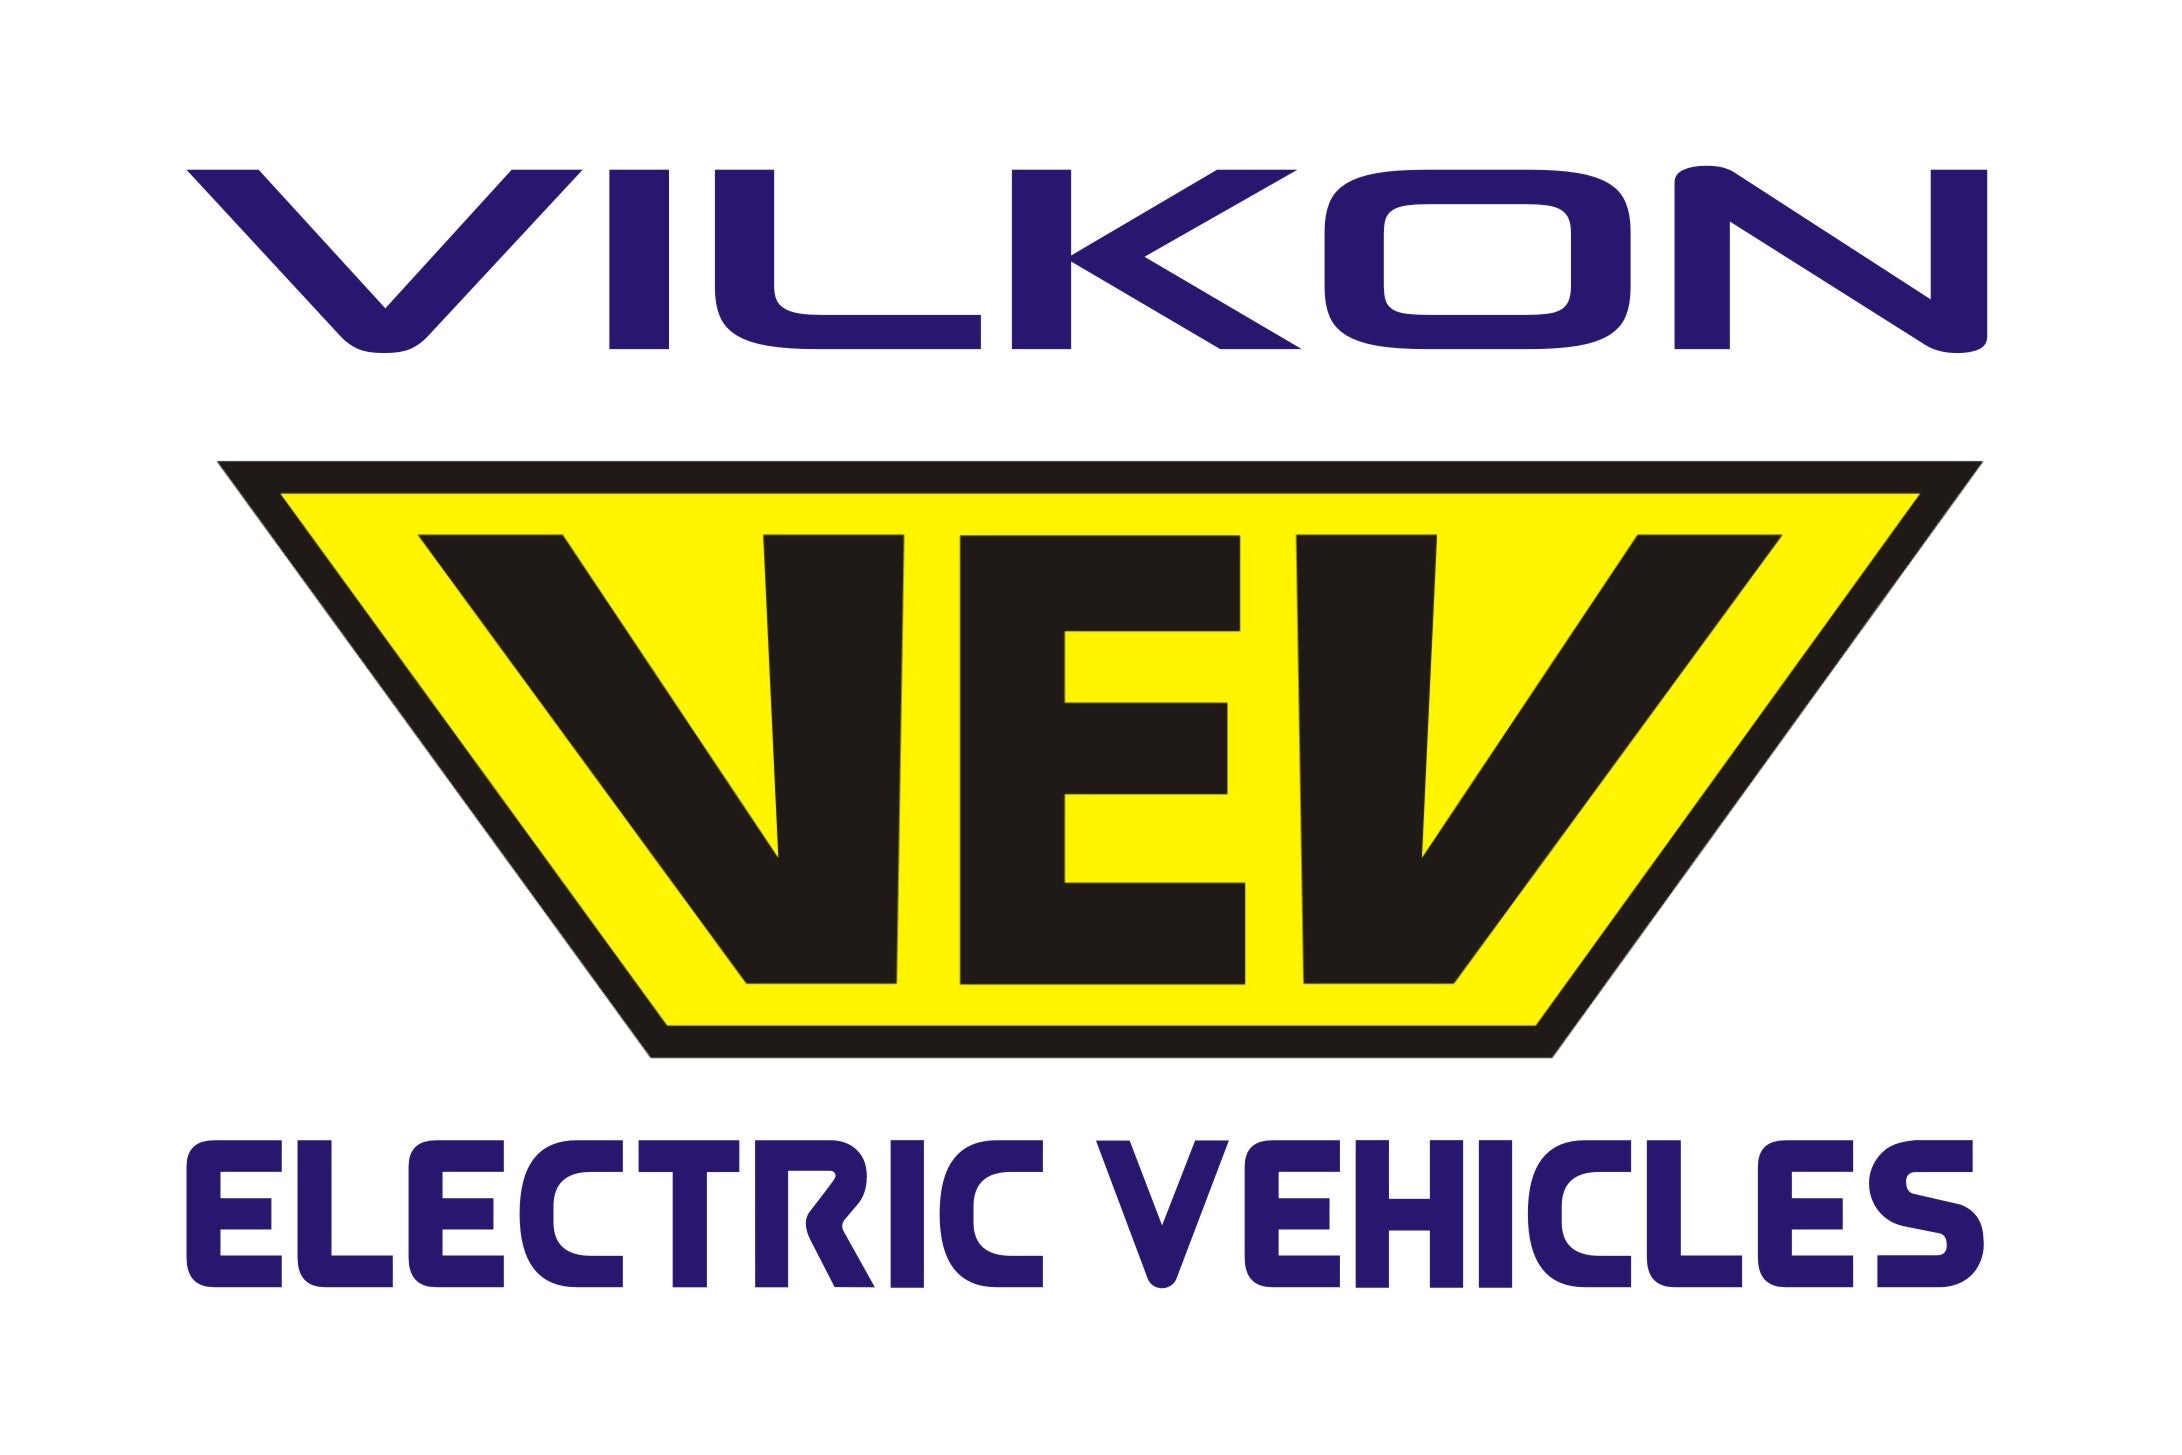 Vilkon Electric Vehicles Greece E.E.